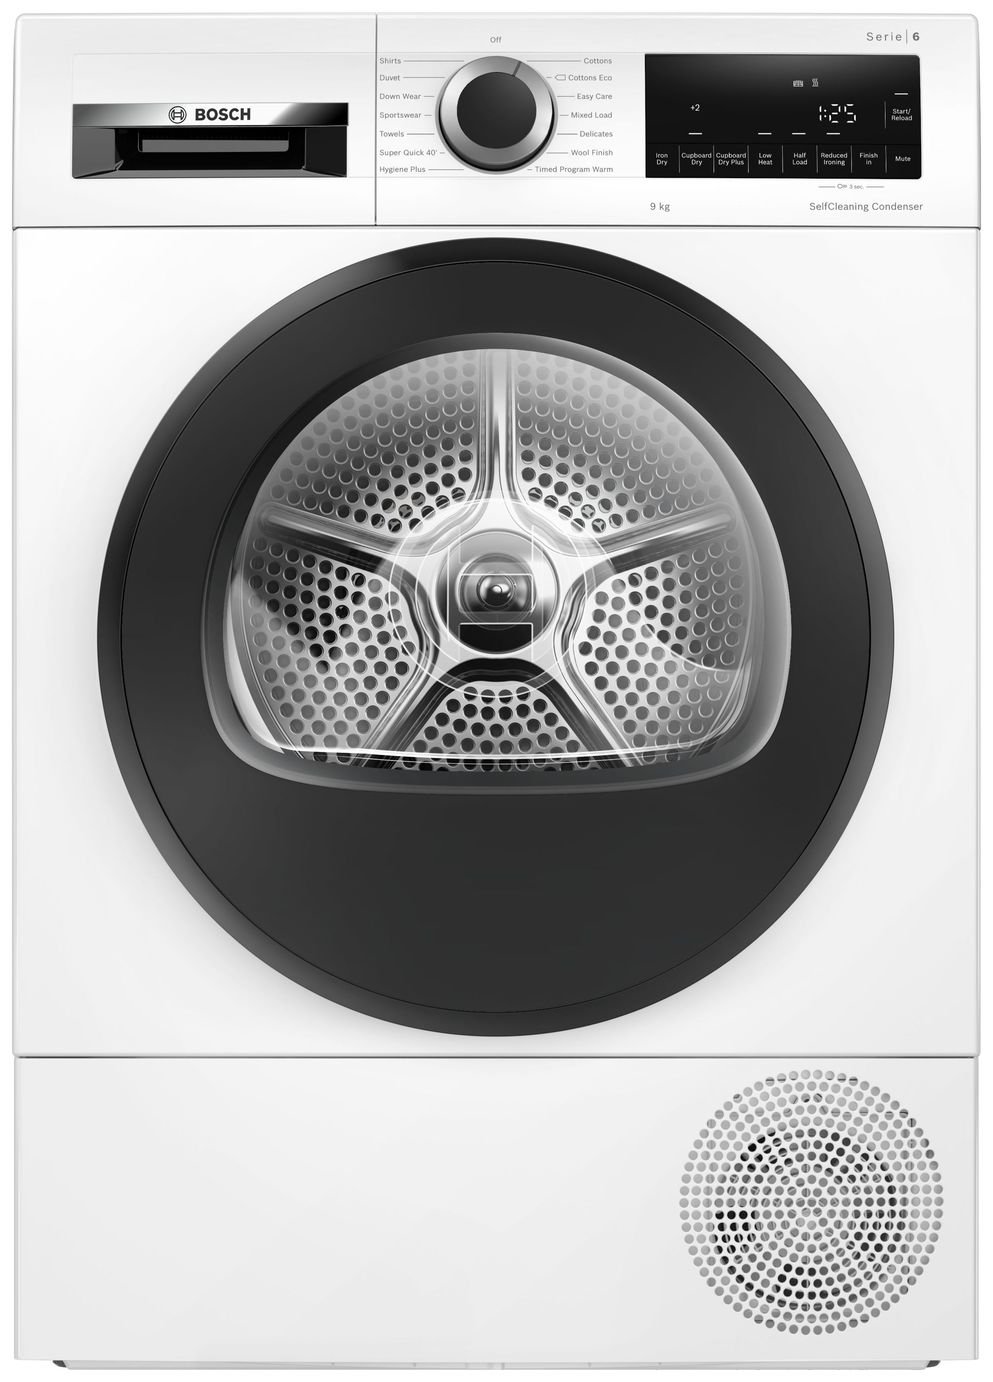 Bosch WQG24509GB 9KG Heat Pump Tumble Dryer - White